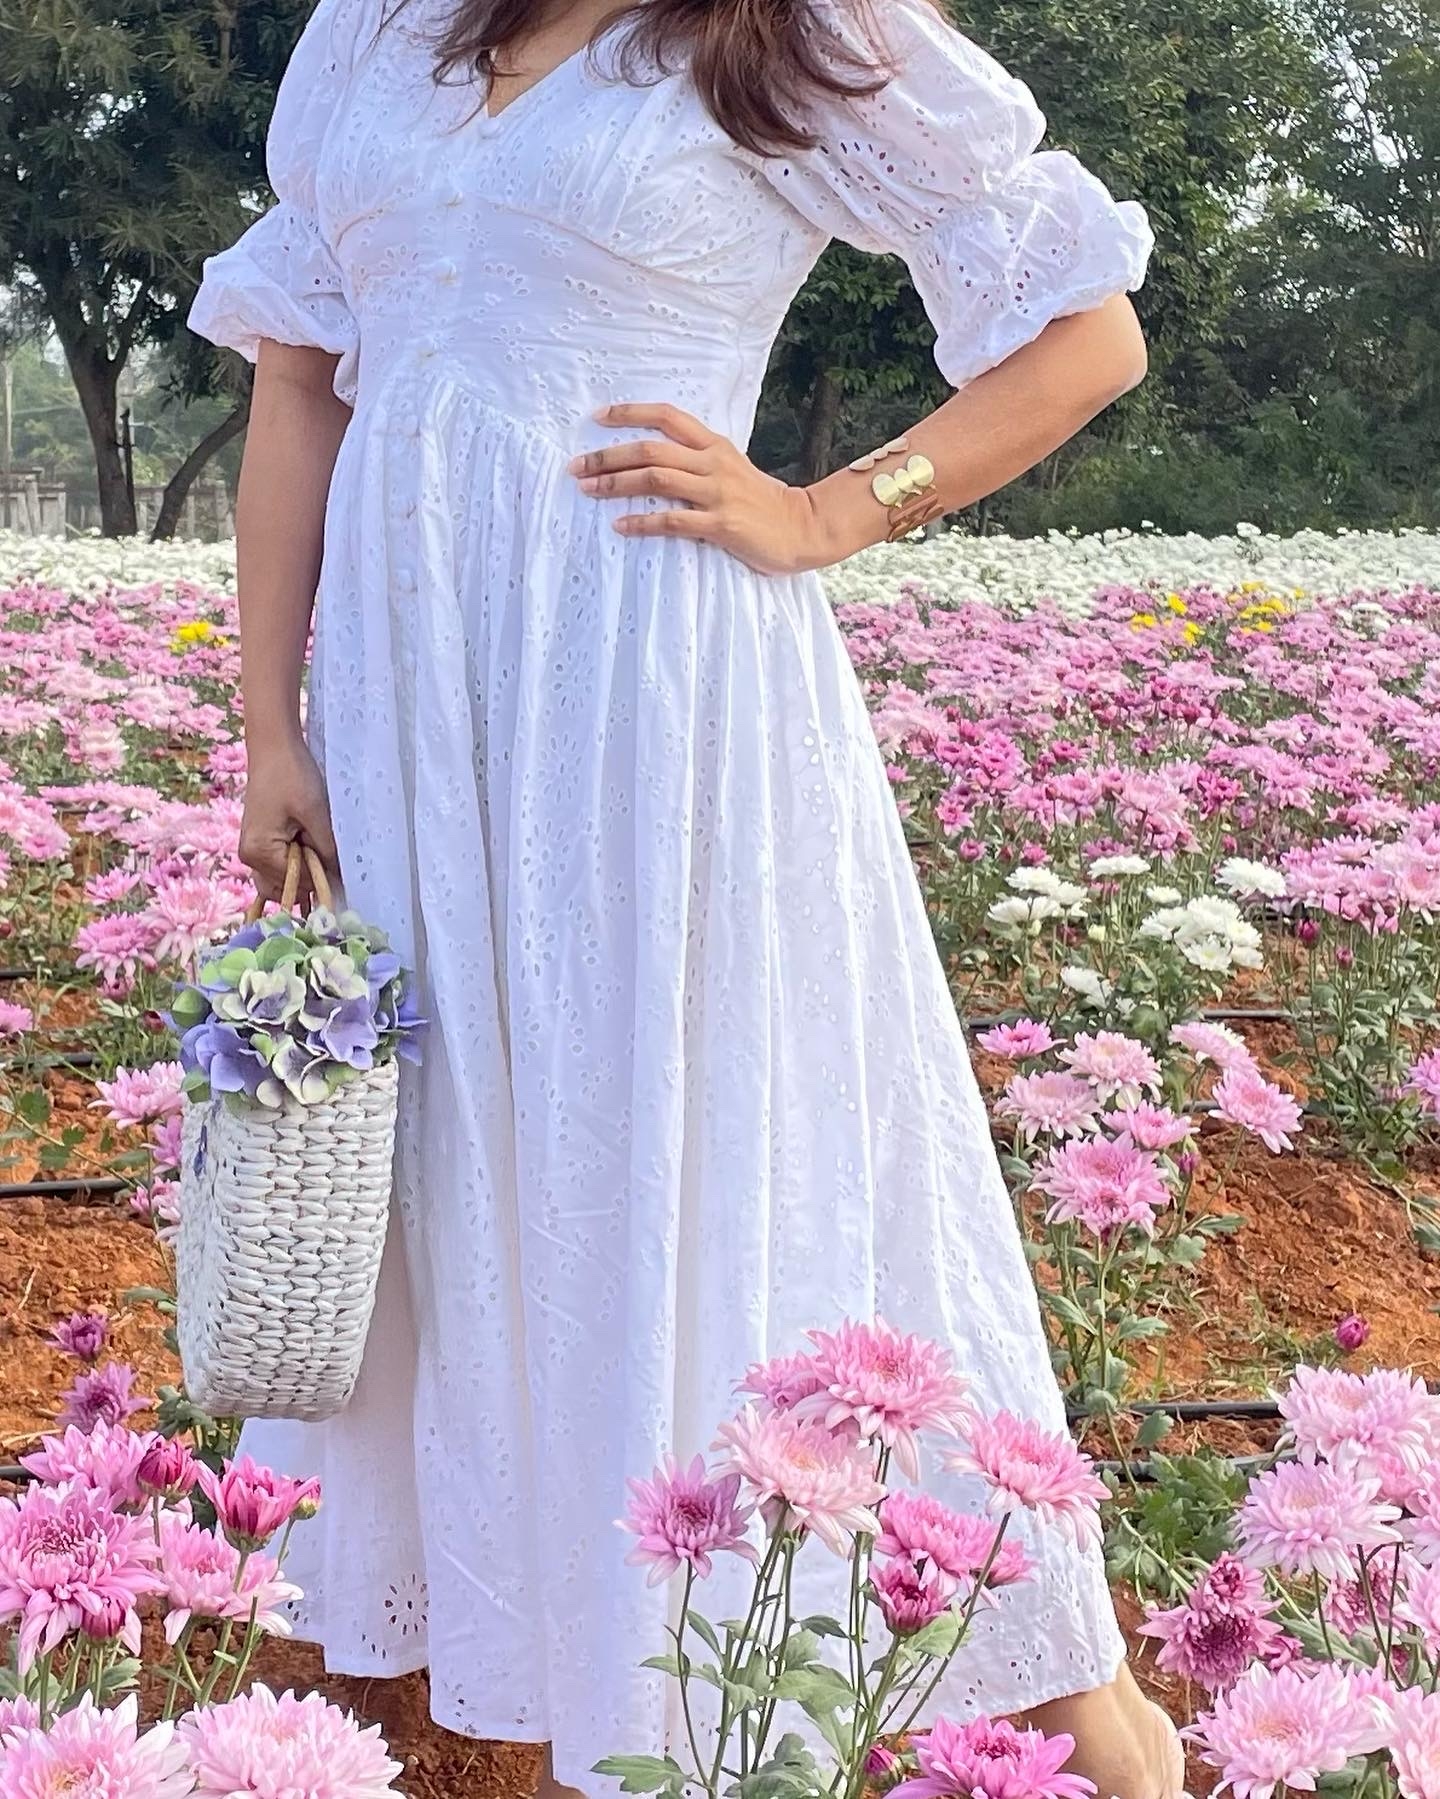 Daisy white dress